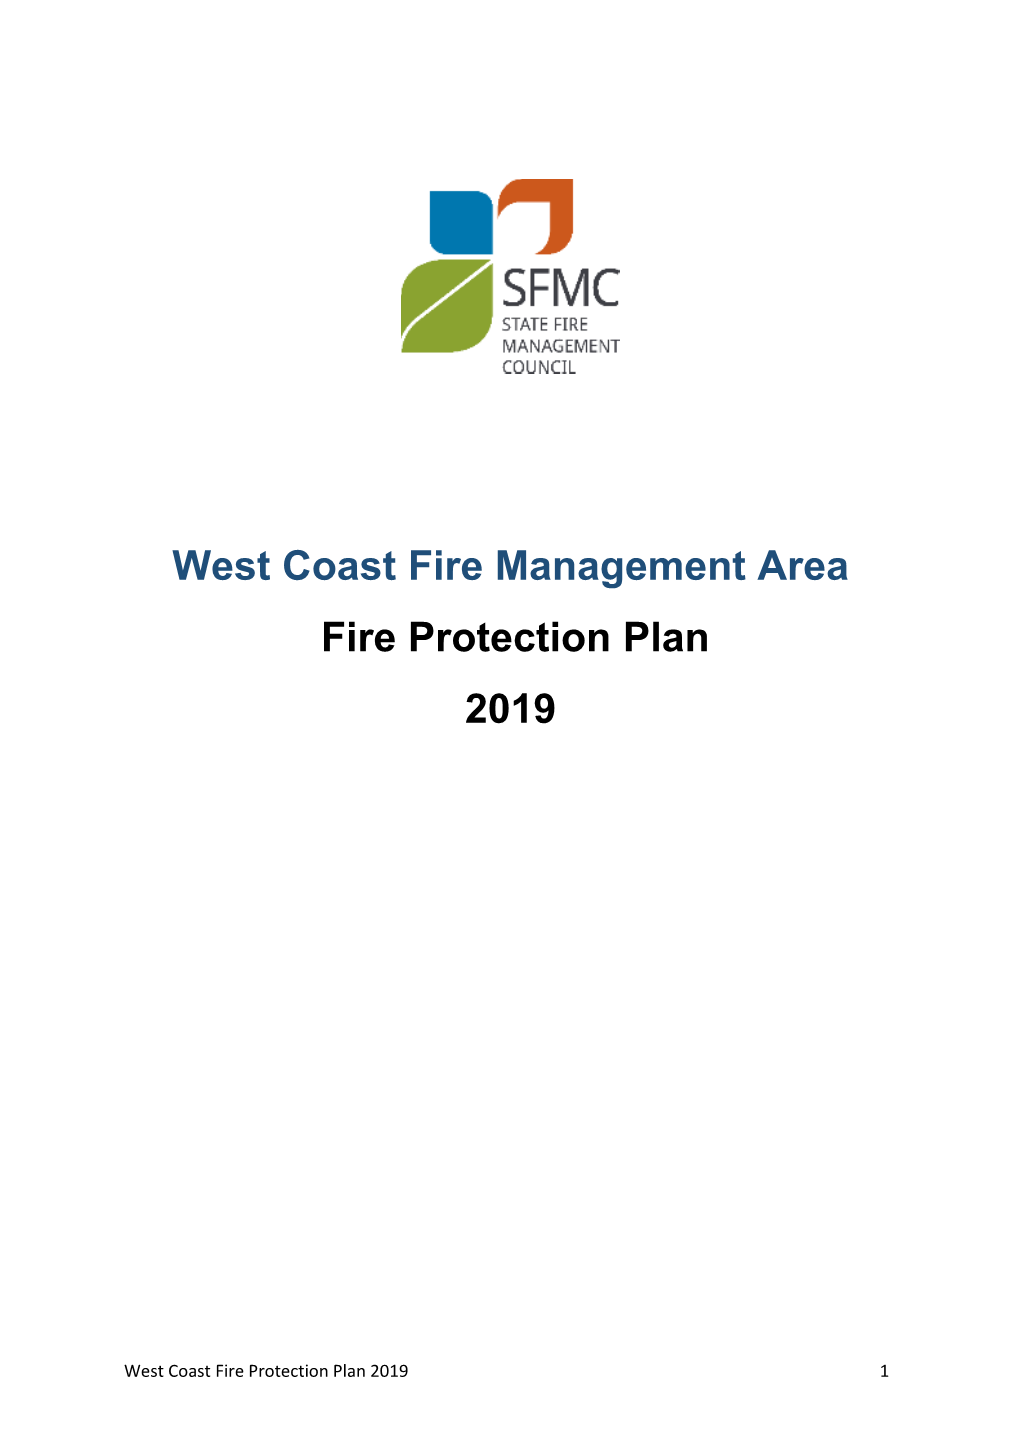 West Coast Fire Management Area Fire Protection Plan 2019